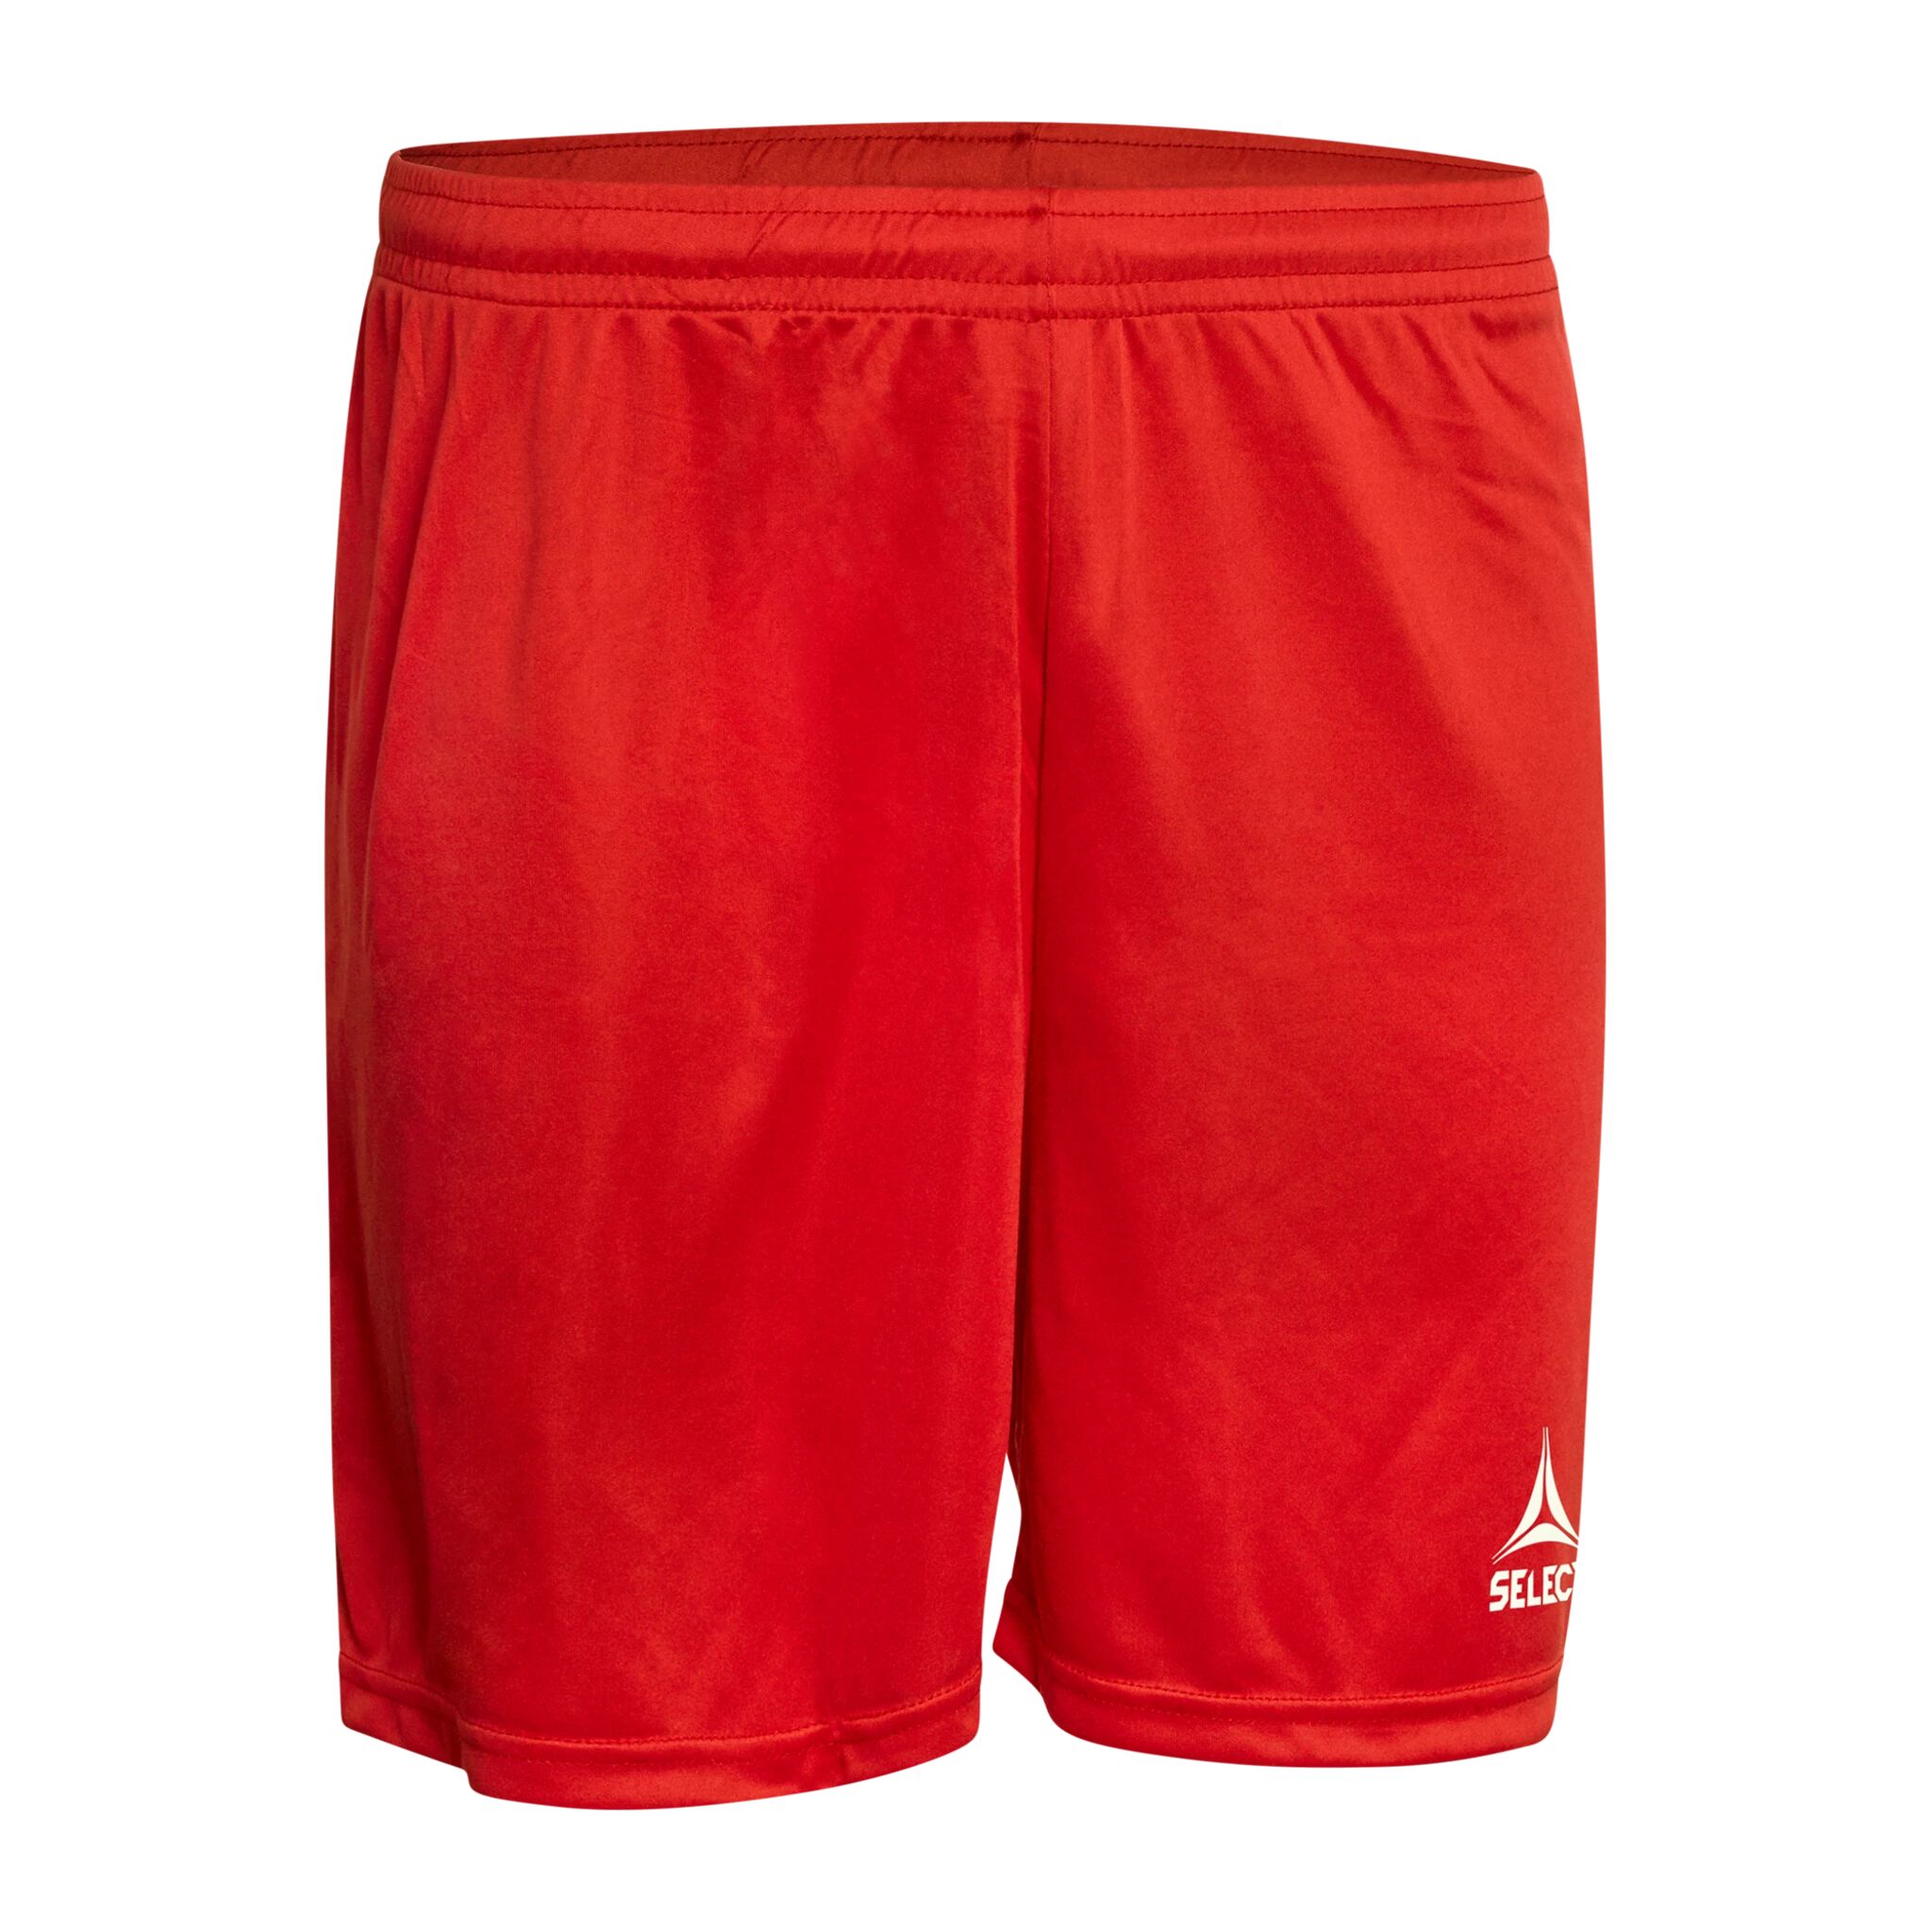 Select Player shorts Pisa, shorts senior 116 RED